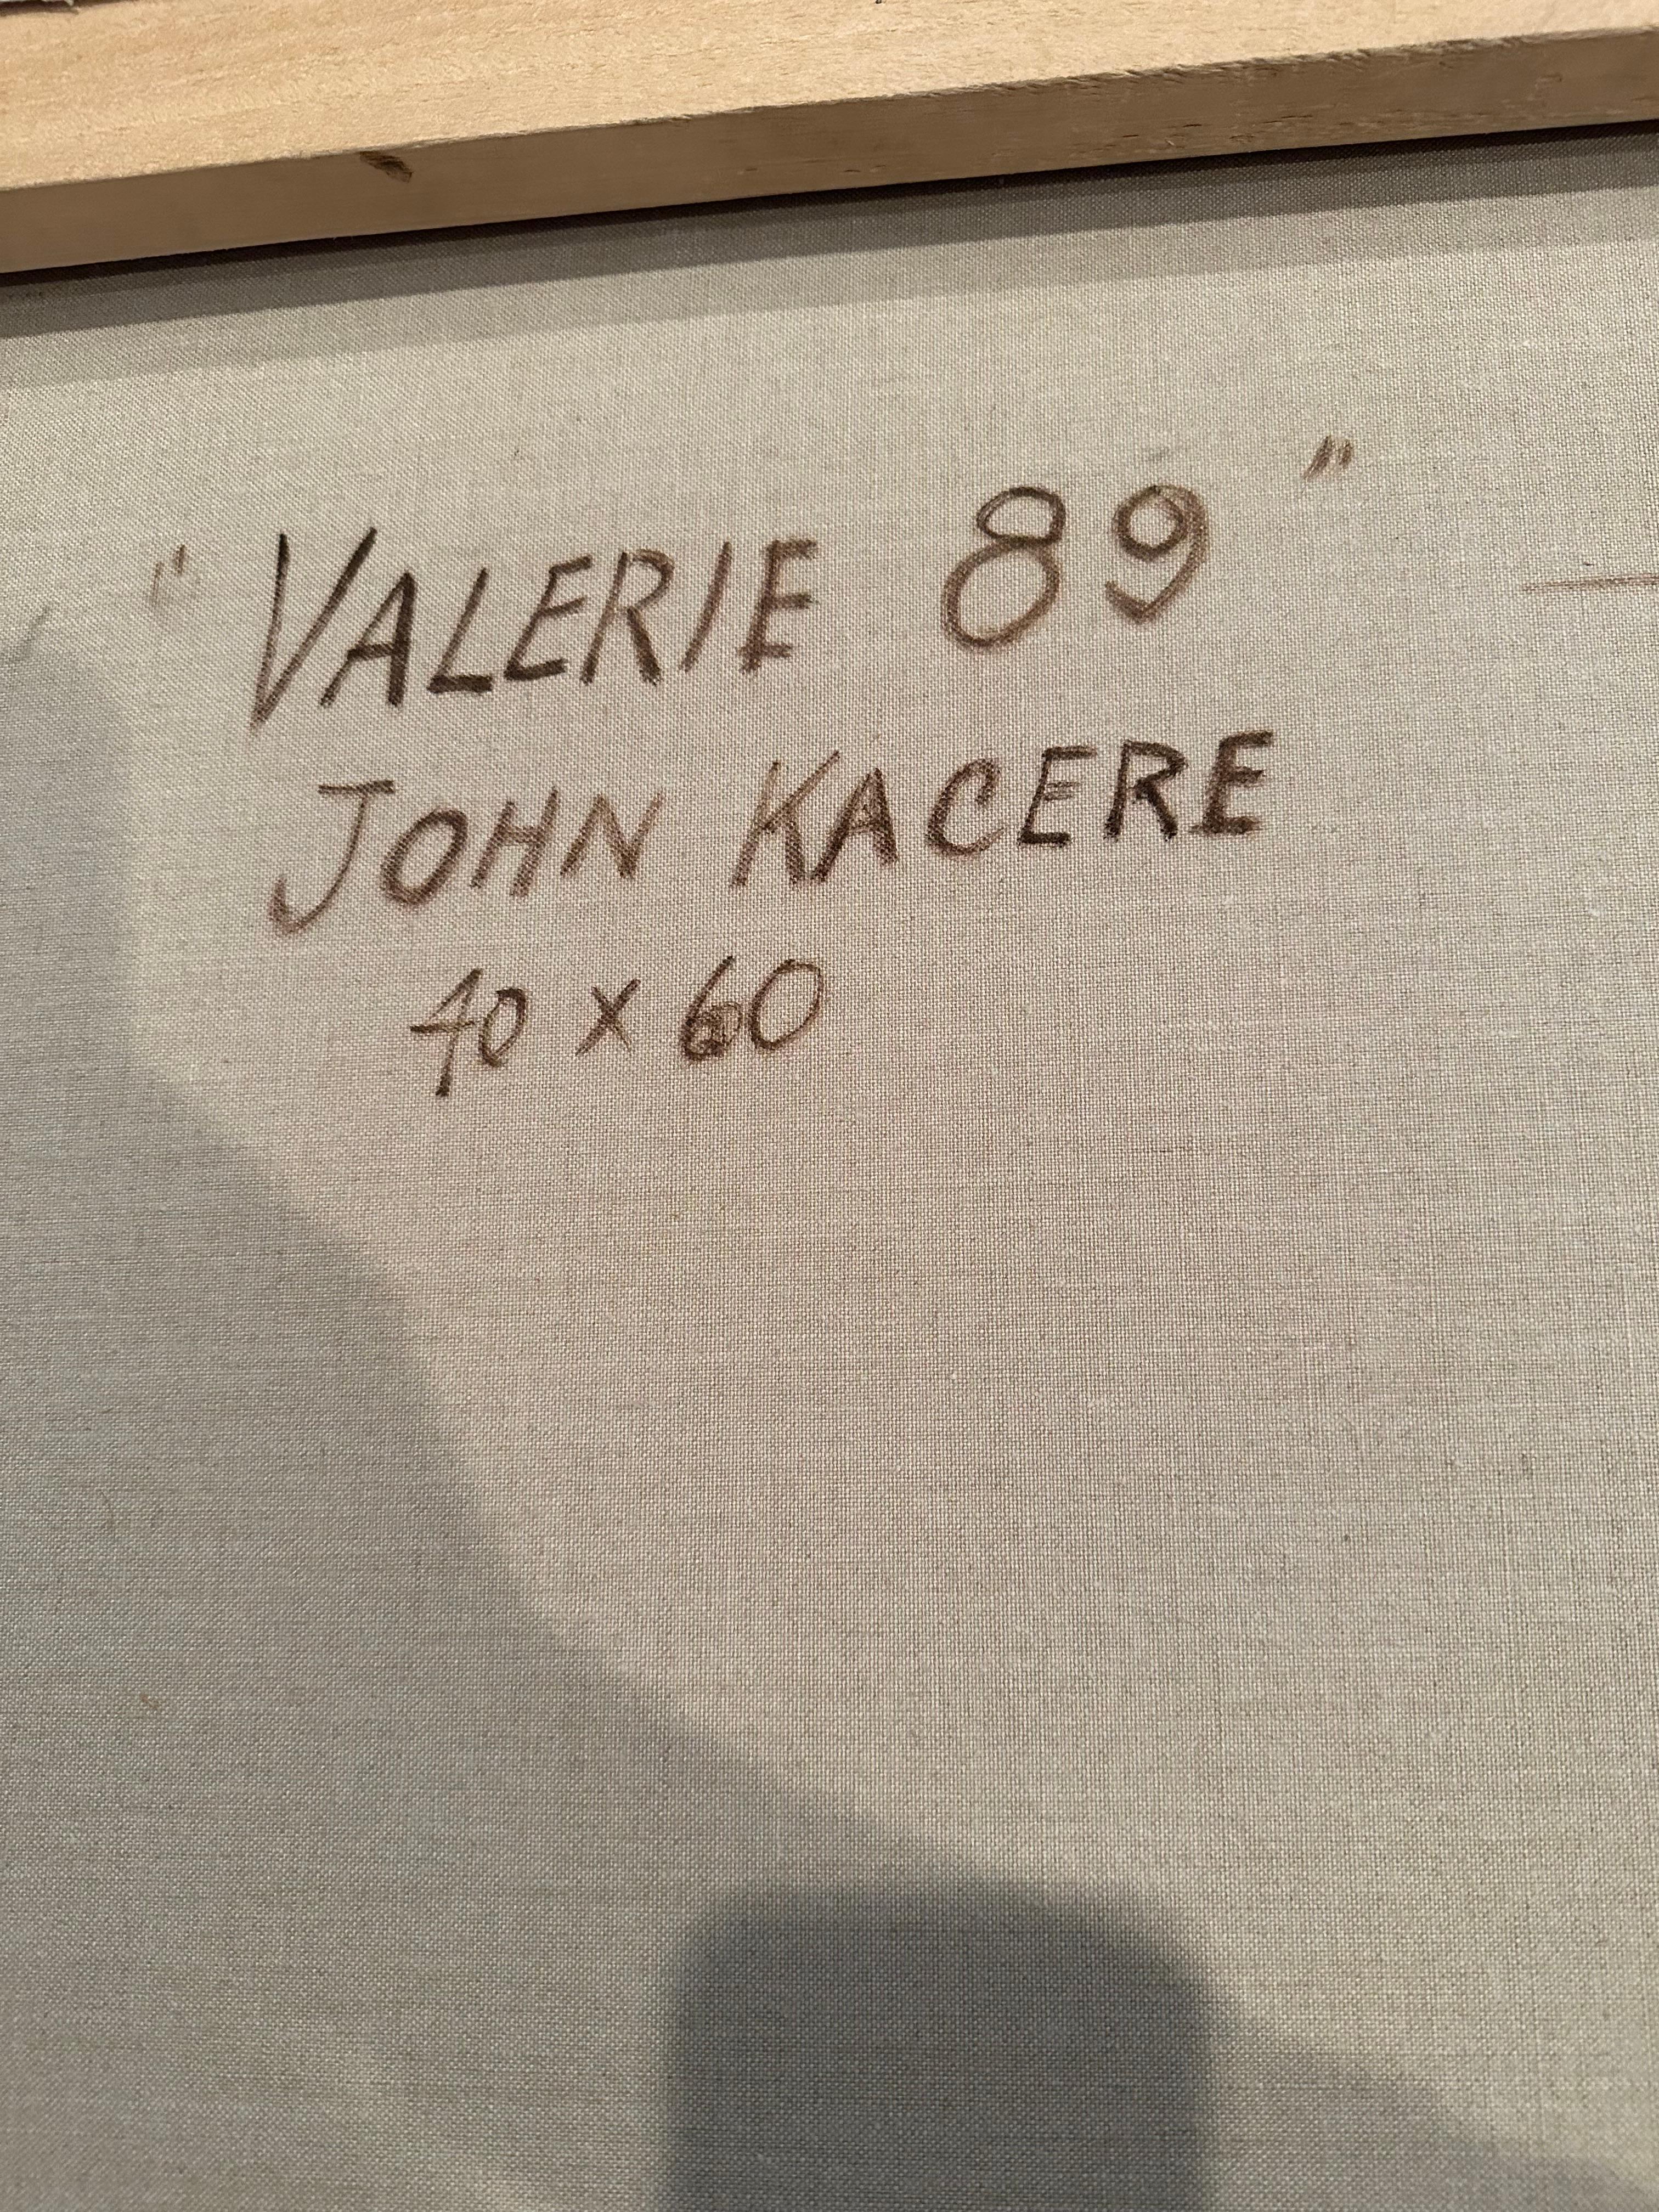 Valerie – Painting von John Kacere